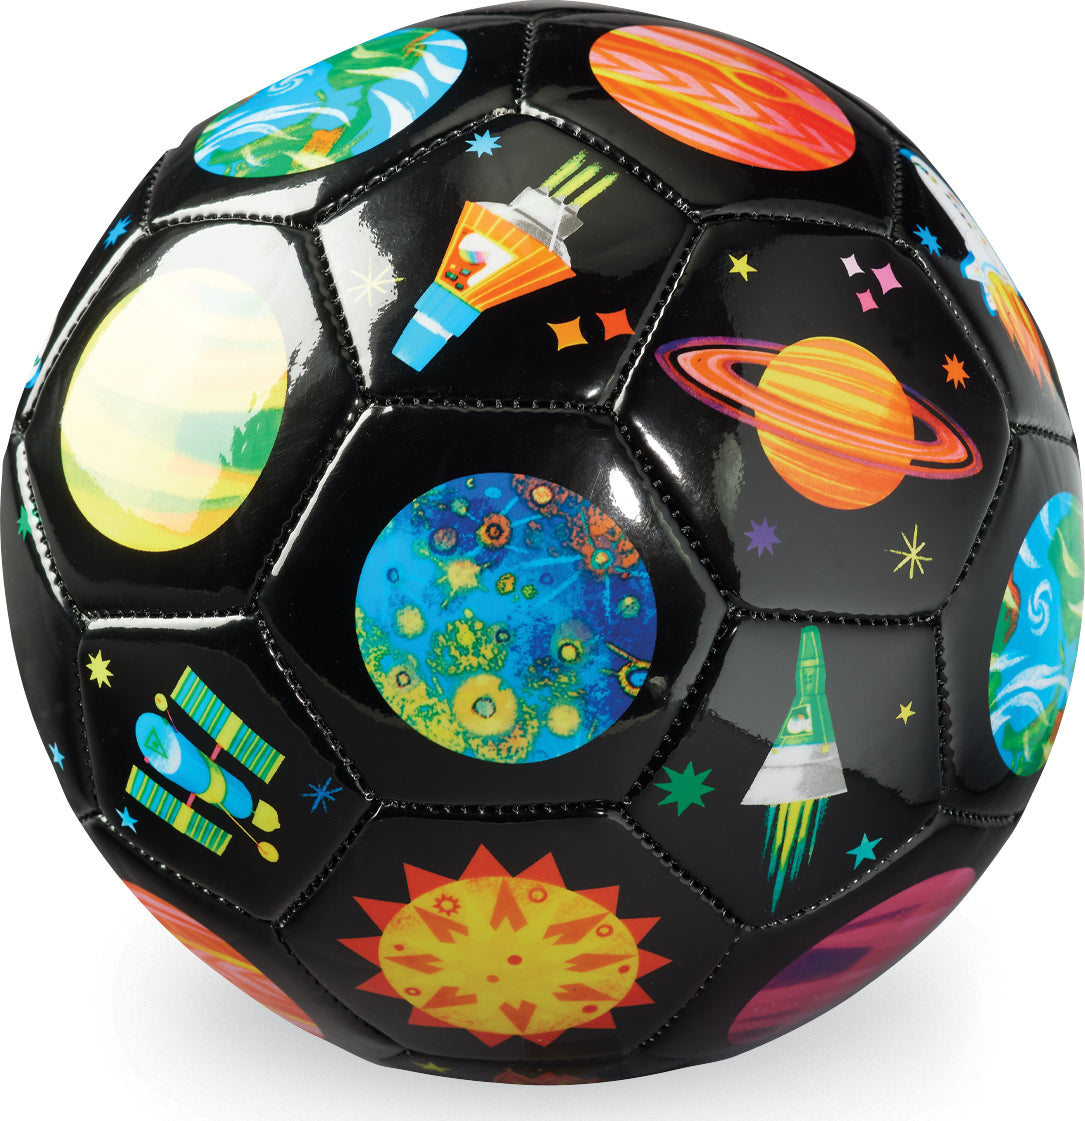 Size 3 Soccer Ball - Space Explorer 